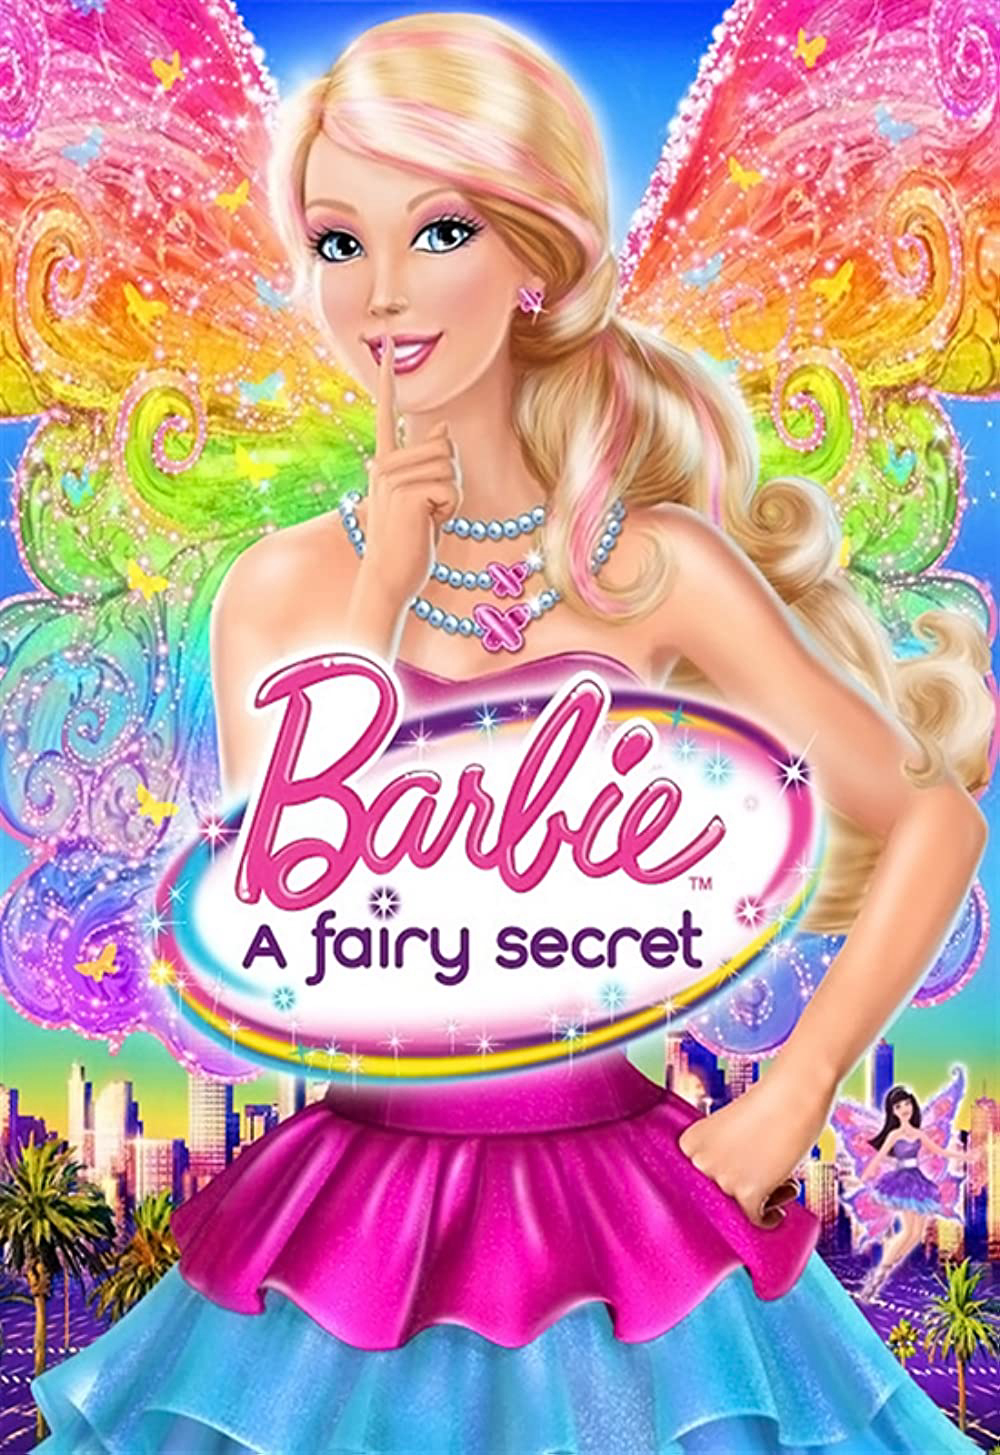 Poster Phim Barbie: A Fairy Secret (Barbie: A Fairy Secret)